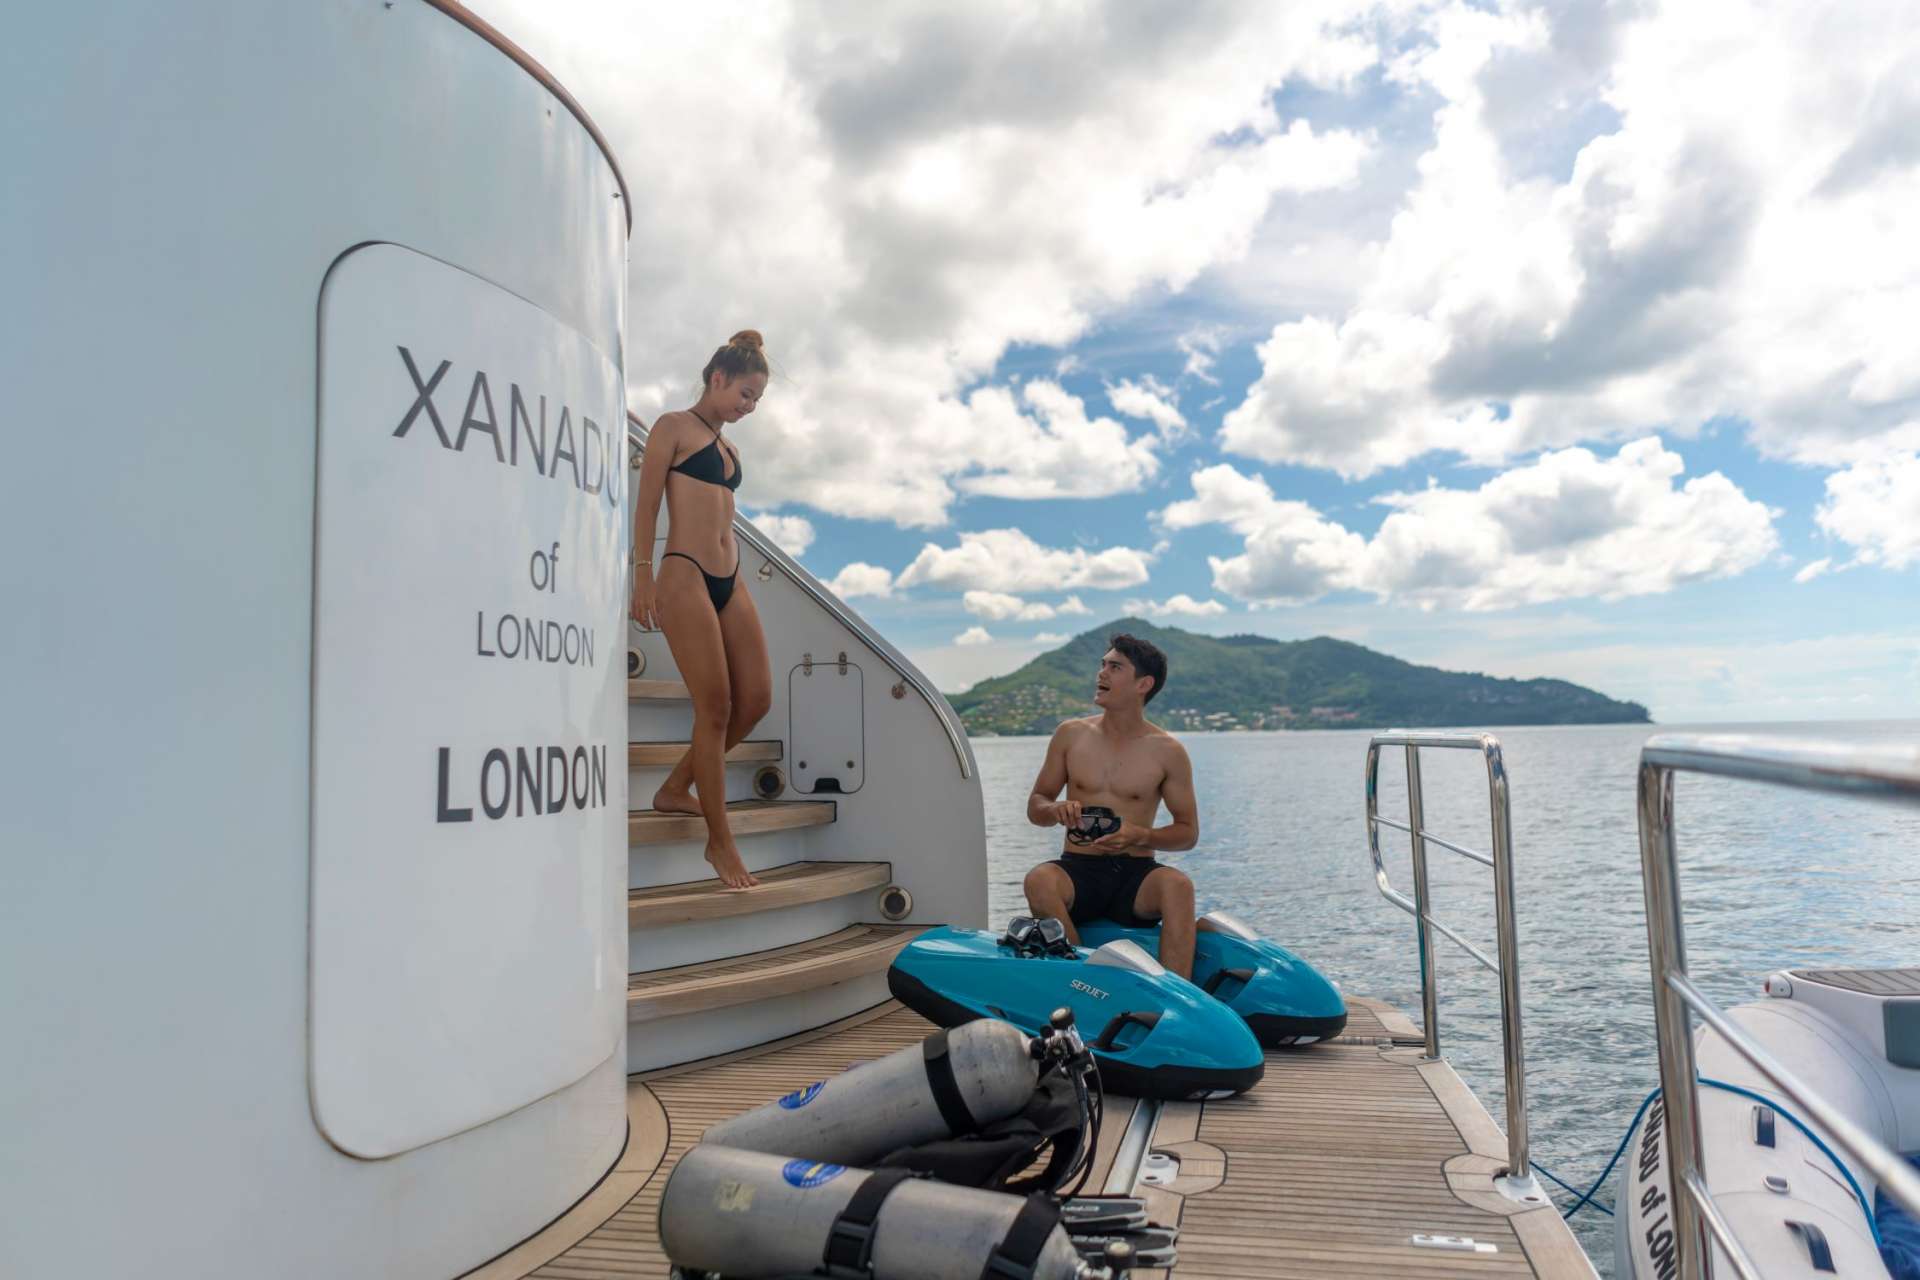 xanadu of london - Motor Boat Charter Thailand & Boat hire in SE Asia 5